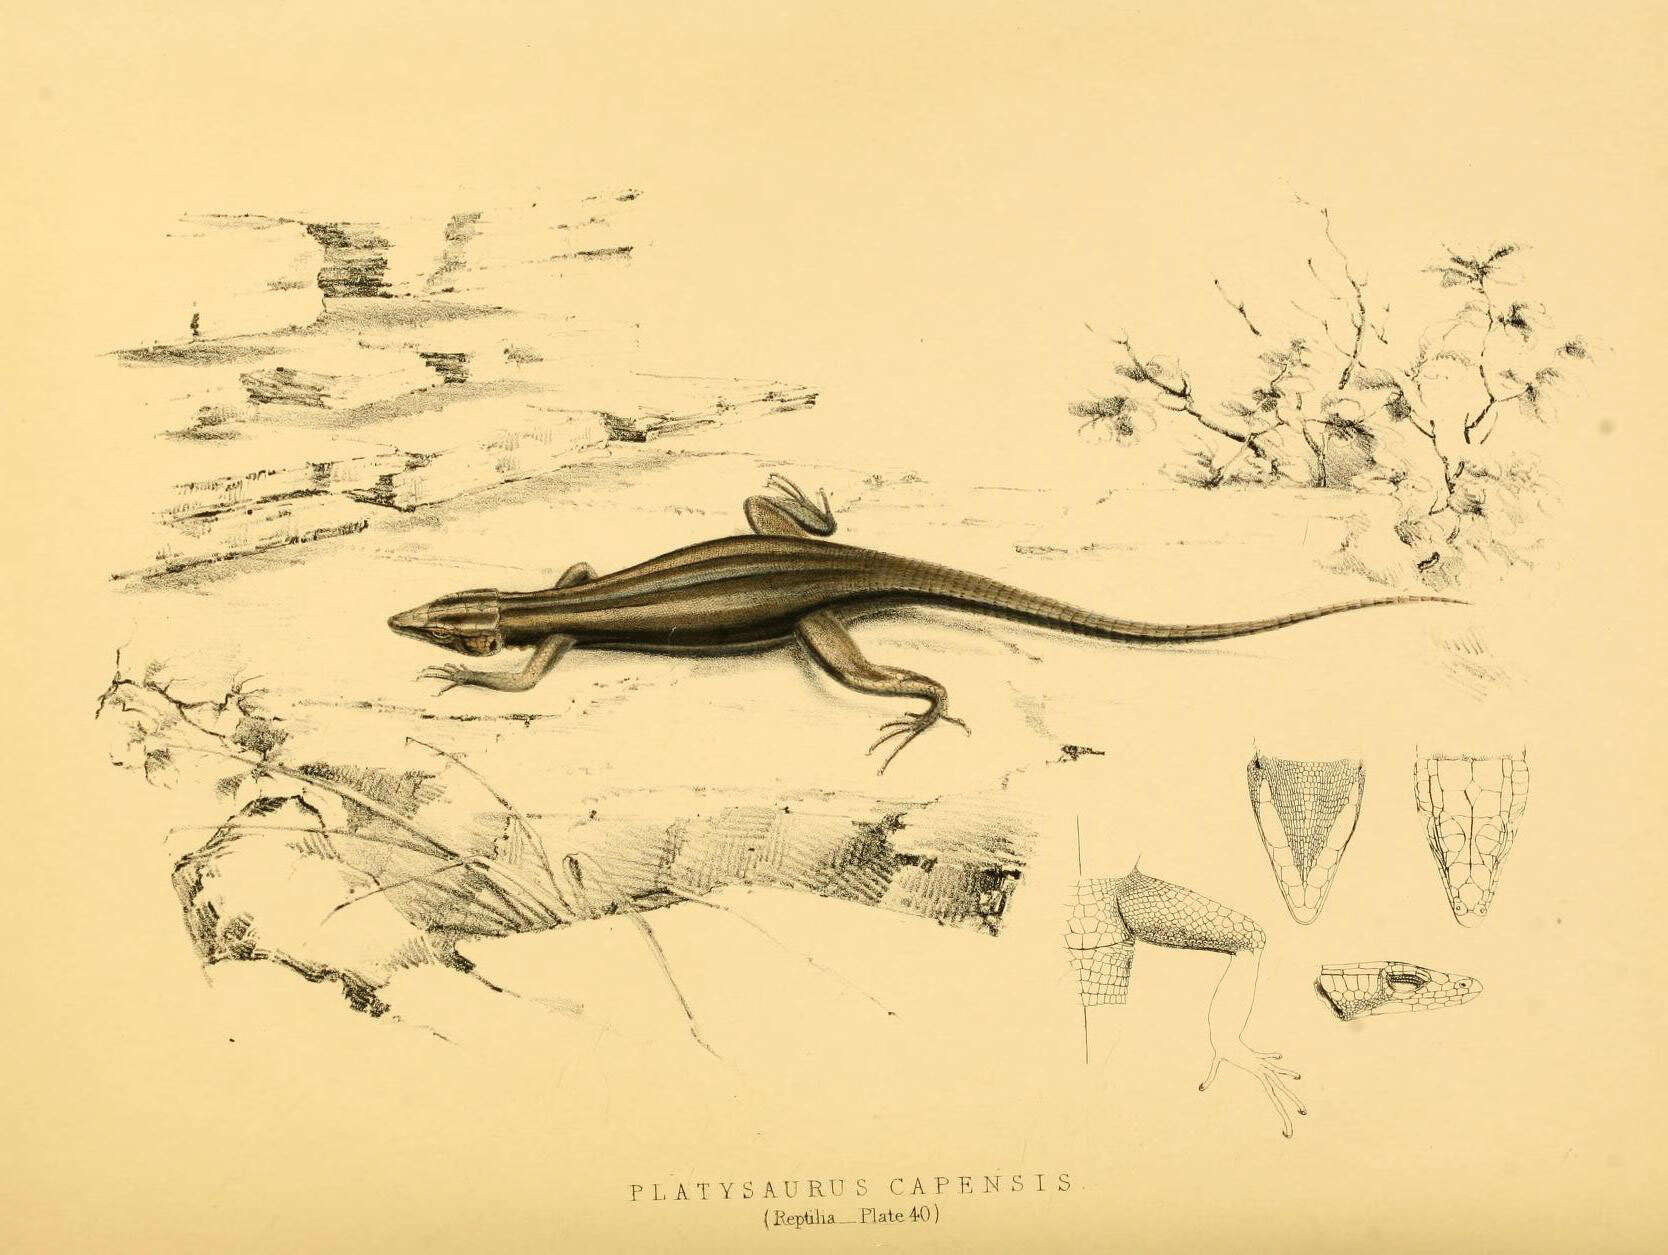 Image of Cape flat lizard